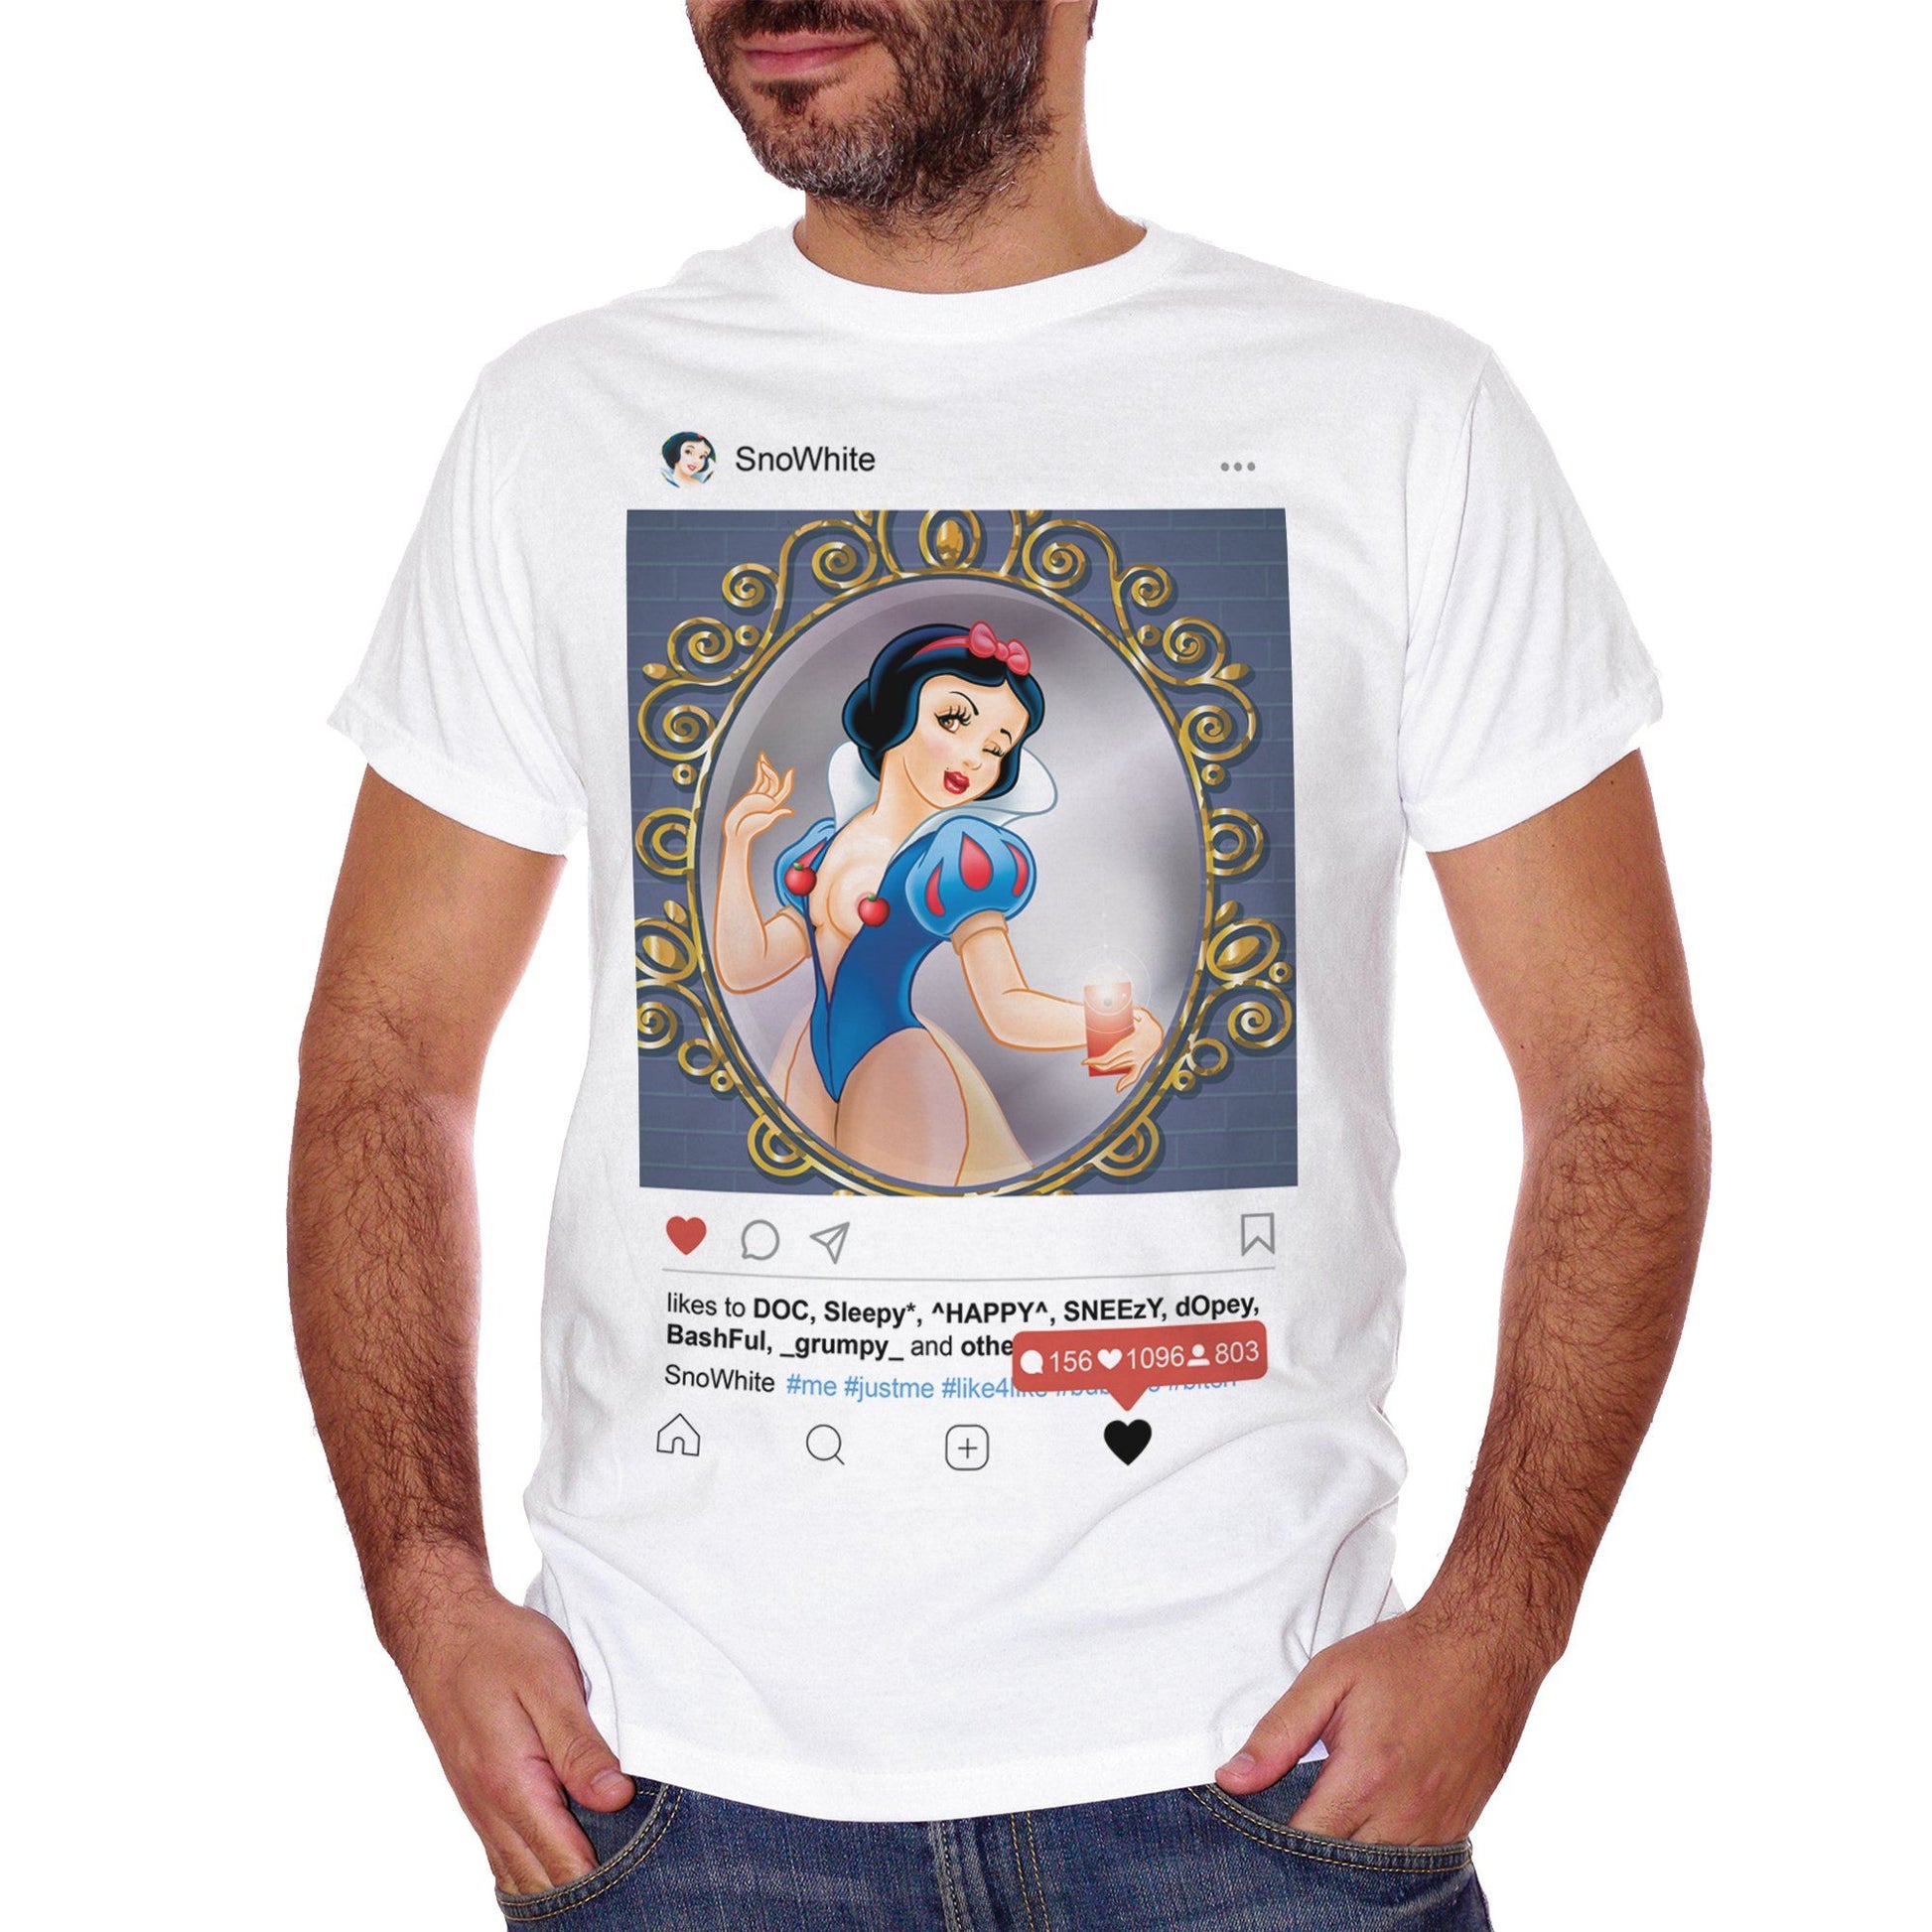 Dim Gray T-Shirt Princess Biancaneve Snow White Social Fashion Selfie - FILM CucShop